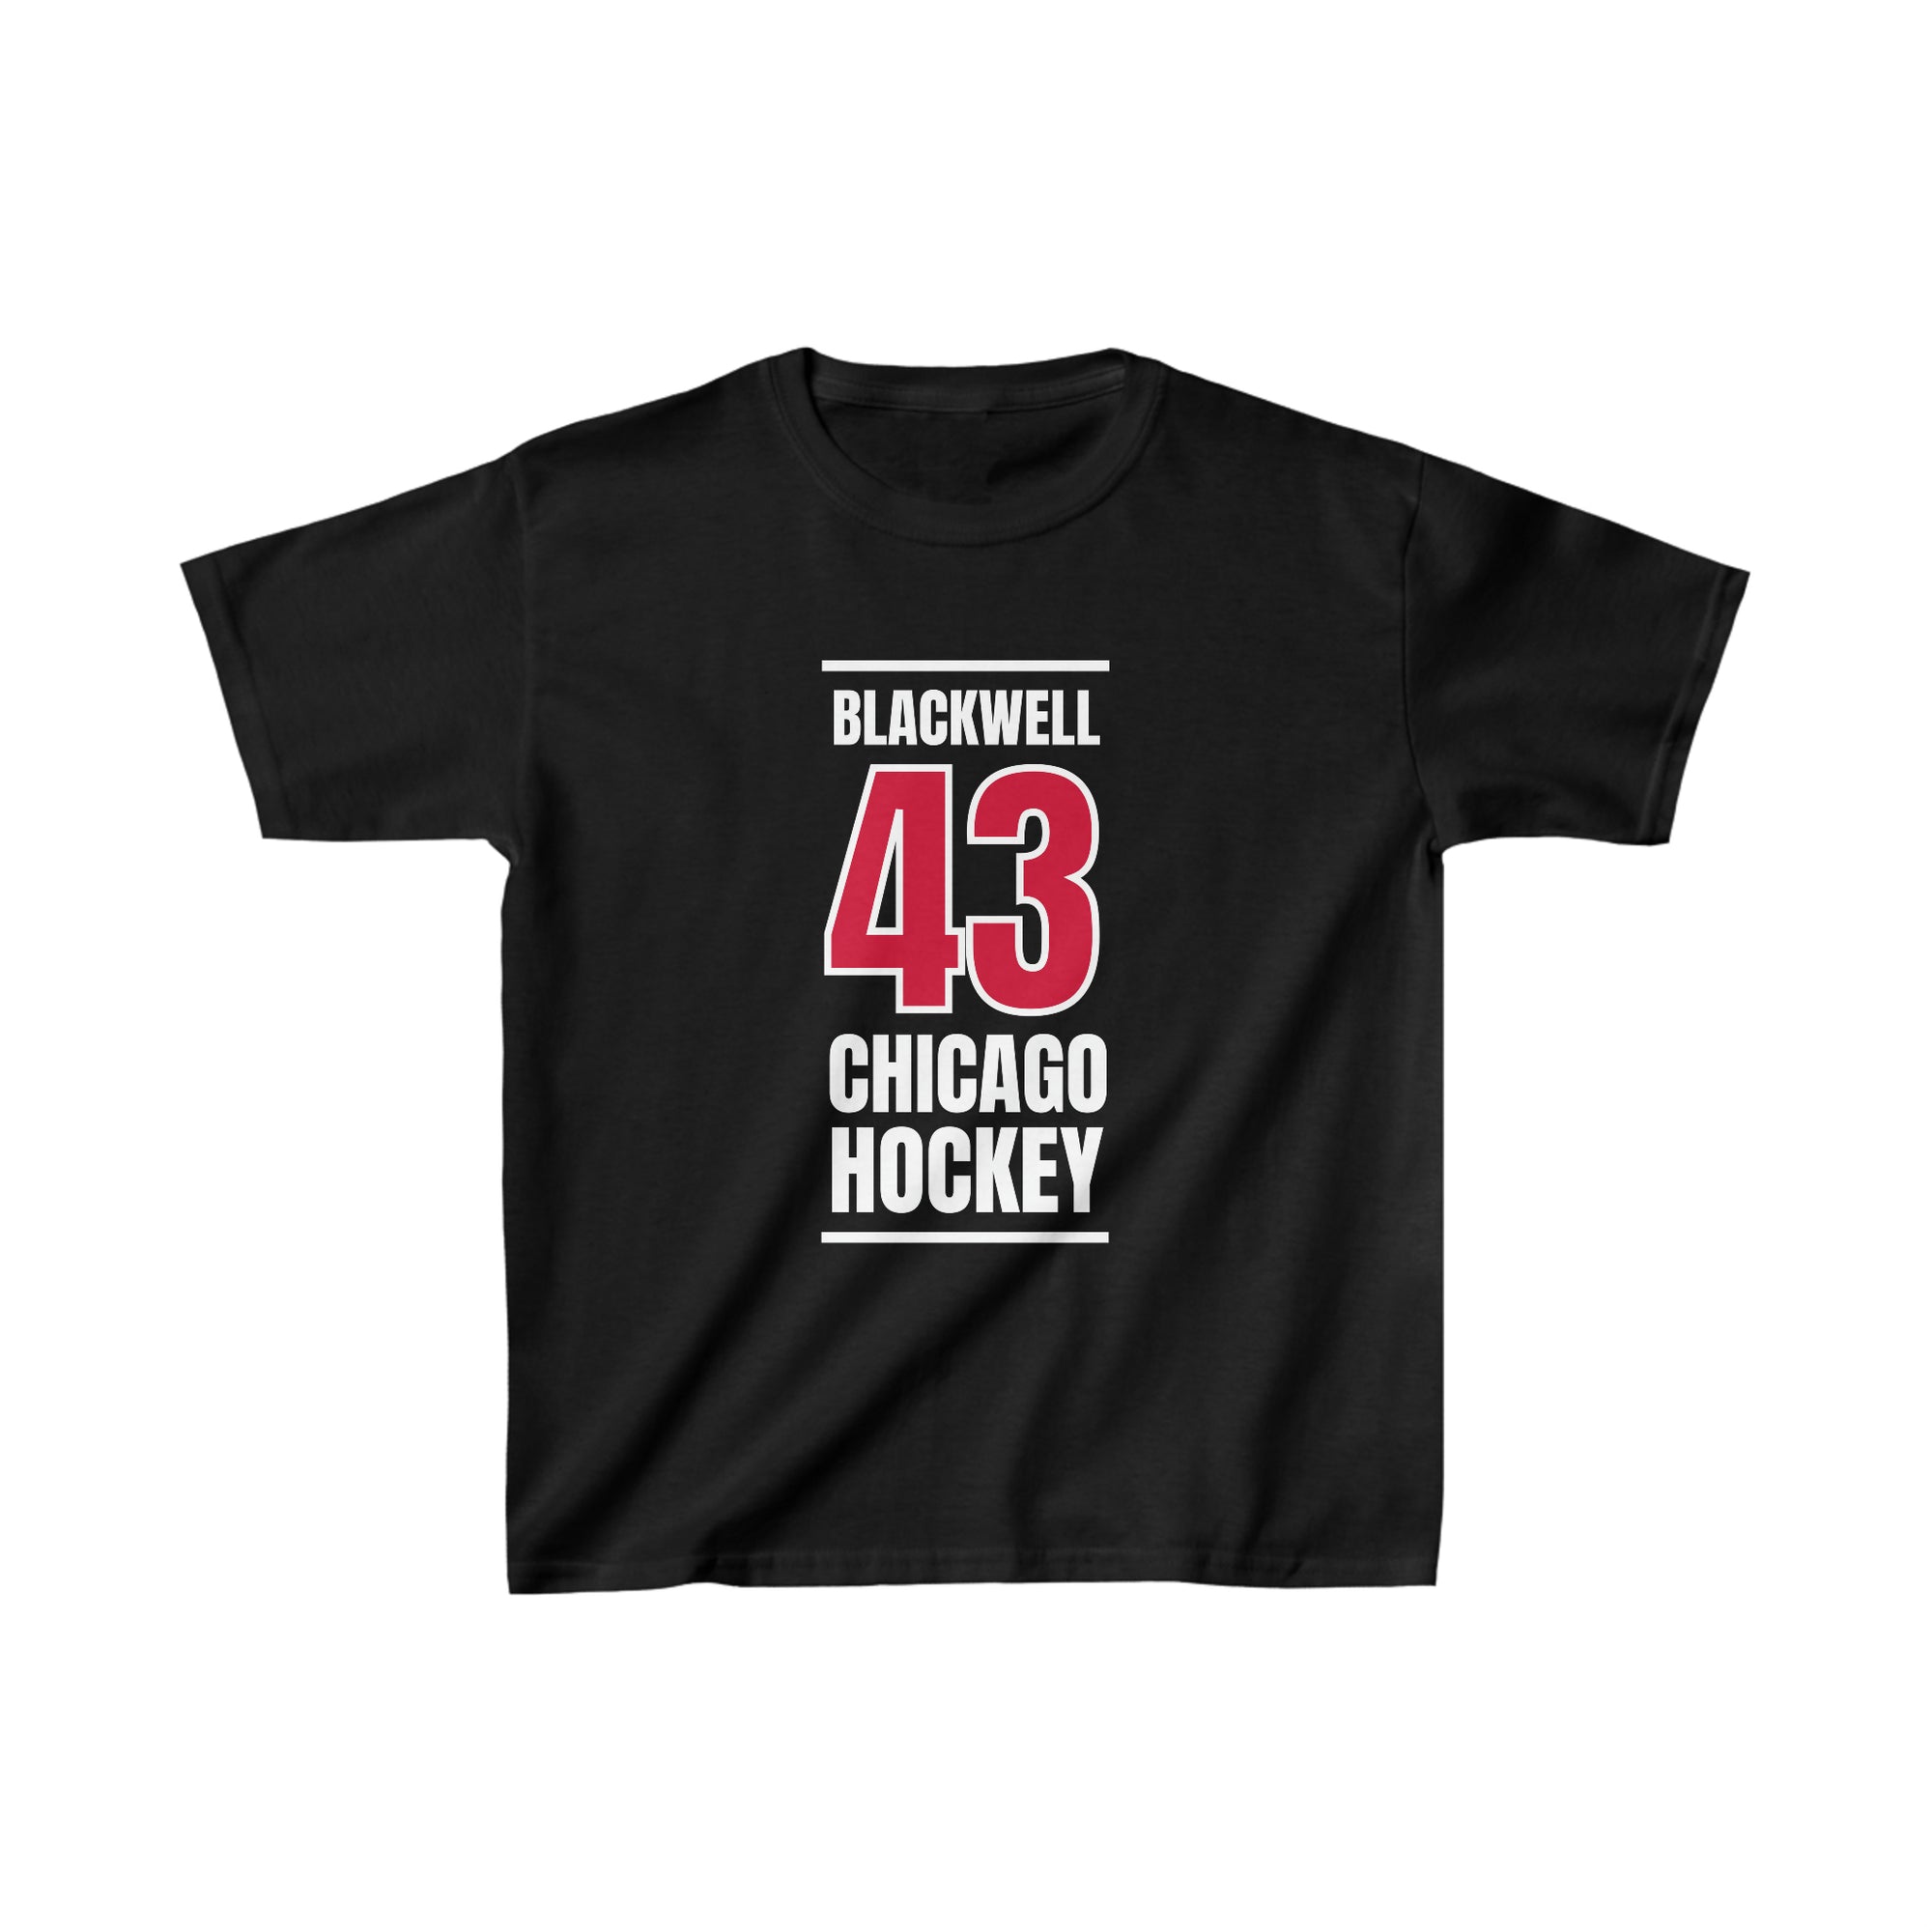 Blackwell 43 Chicago Hockey Red Vertical Design Kids Tee